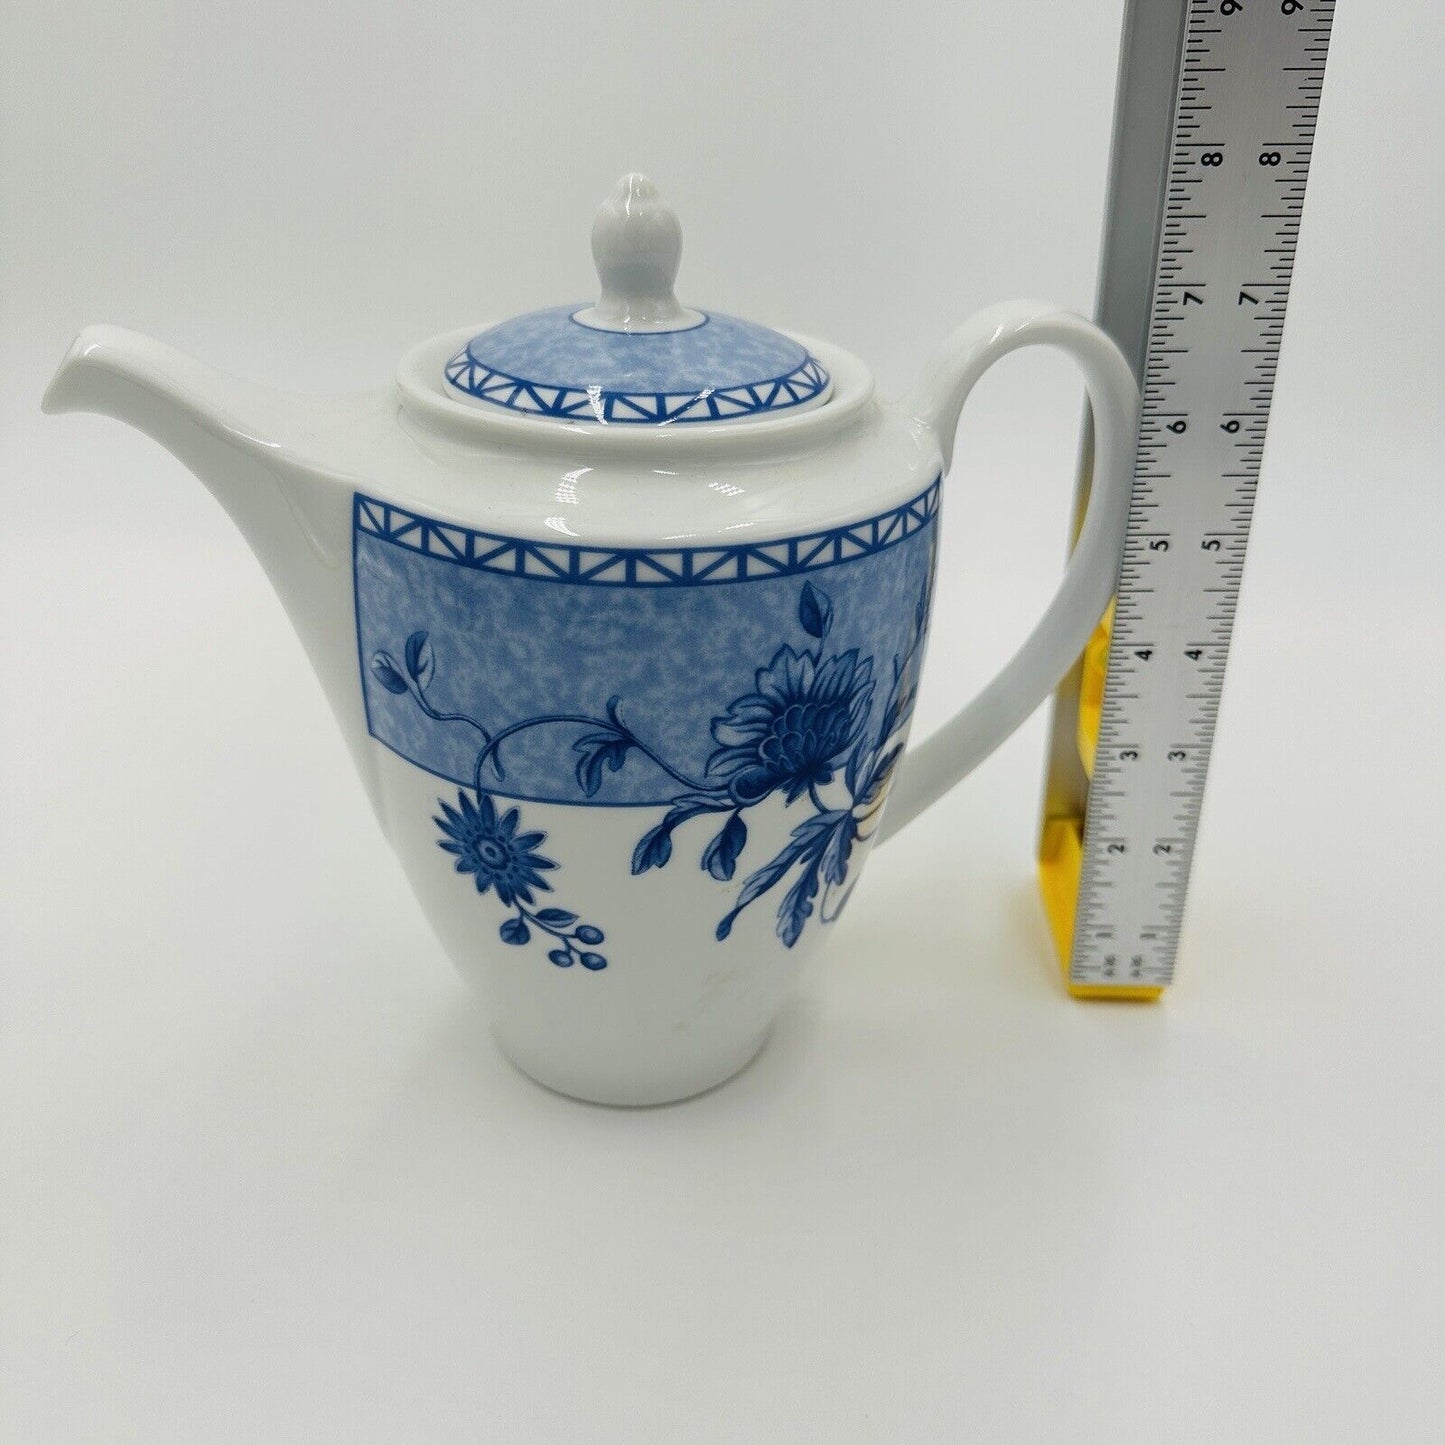 Wedgwood Coffee Pot Mikado Blue and White Porcelain Servewear Vintage Home China